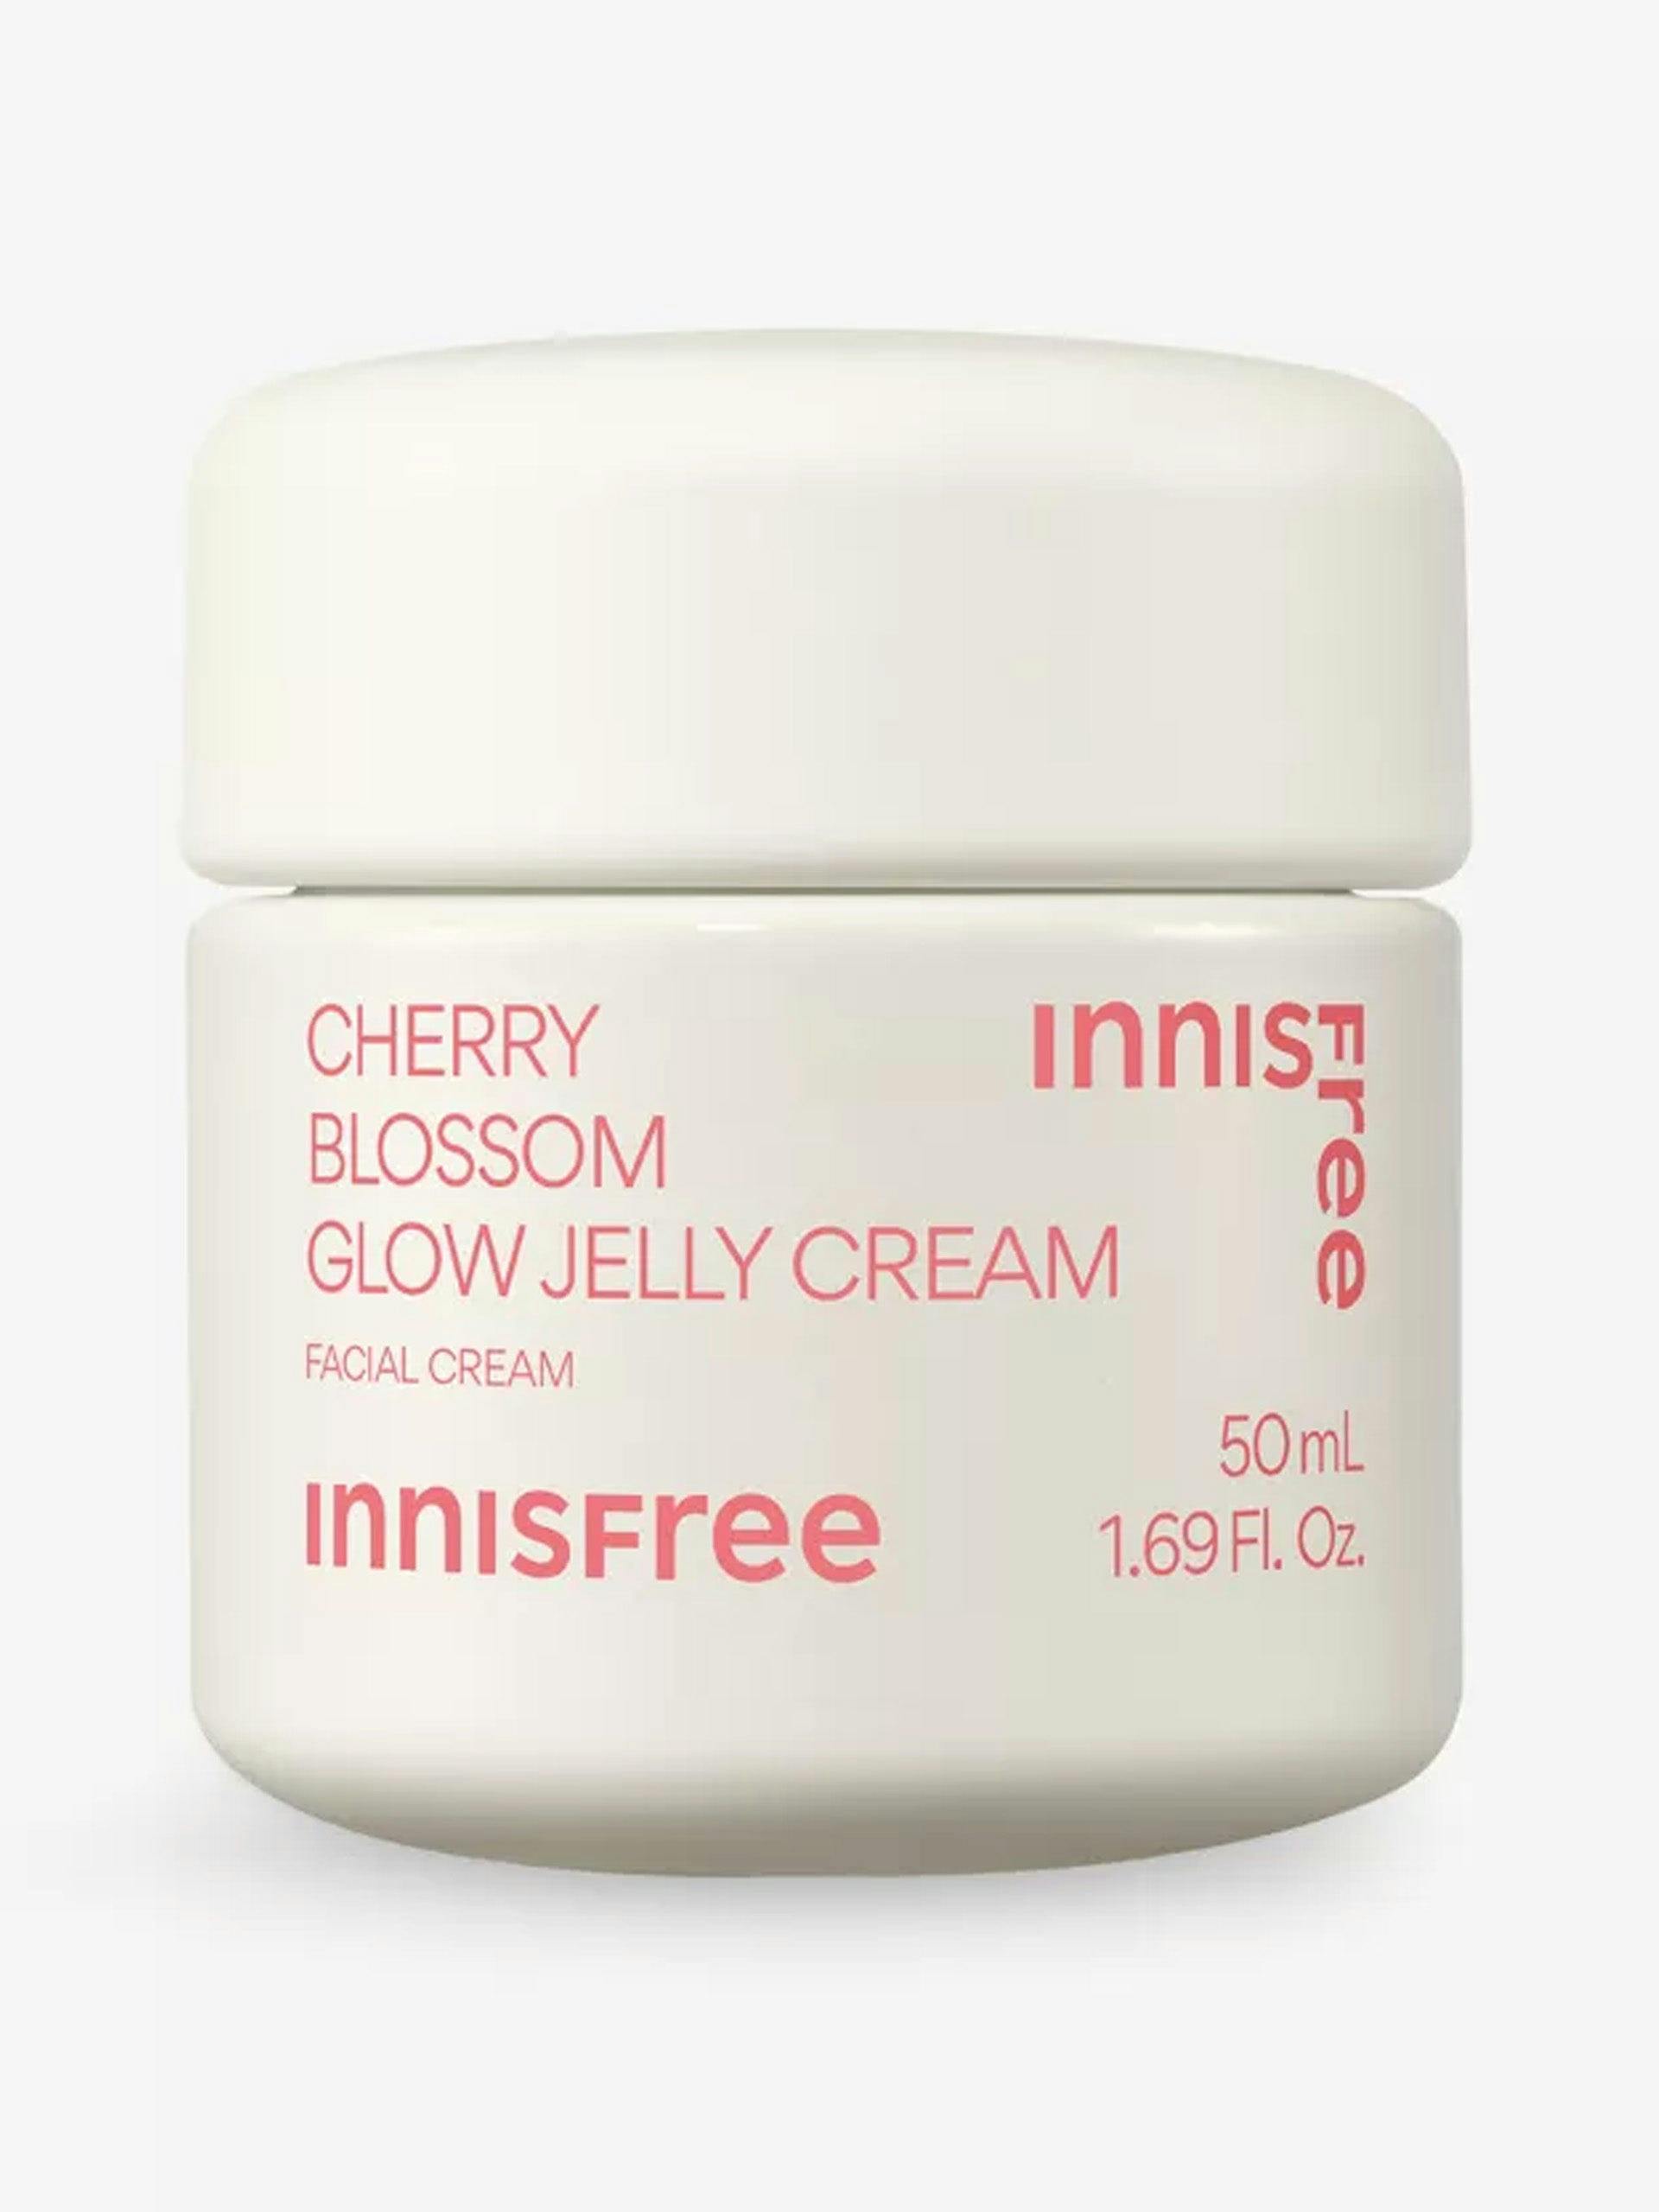 Cherry blossom glow jelly cream